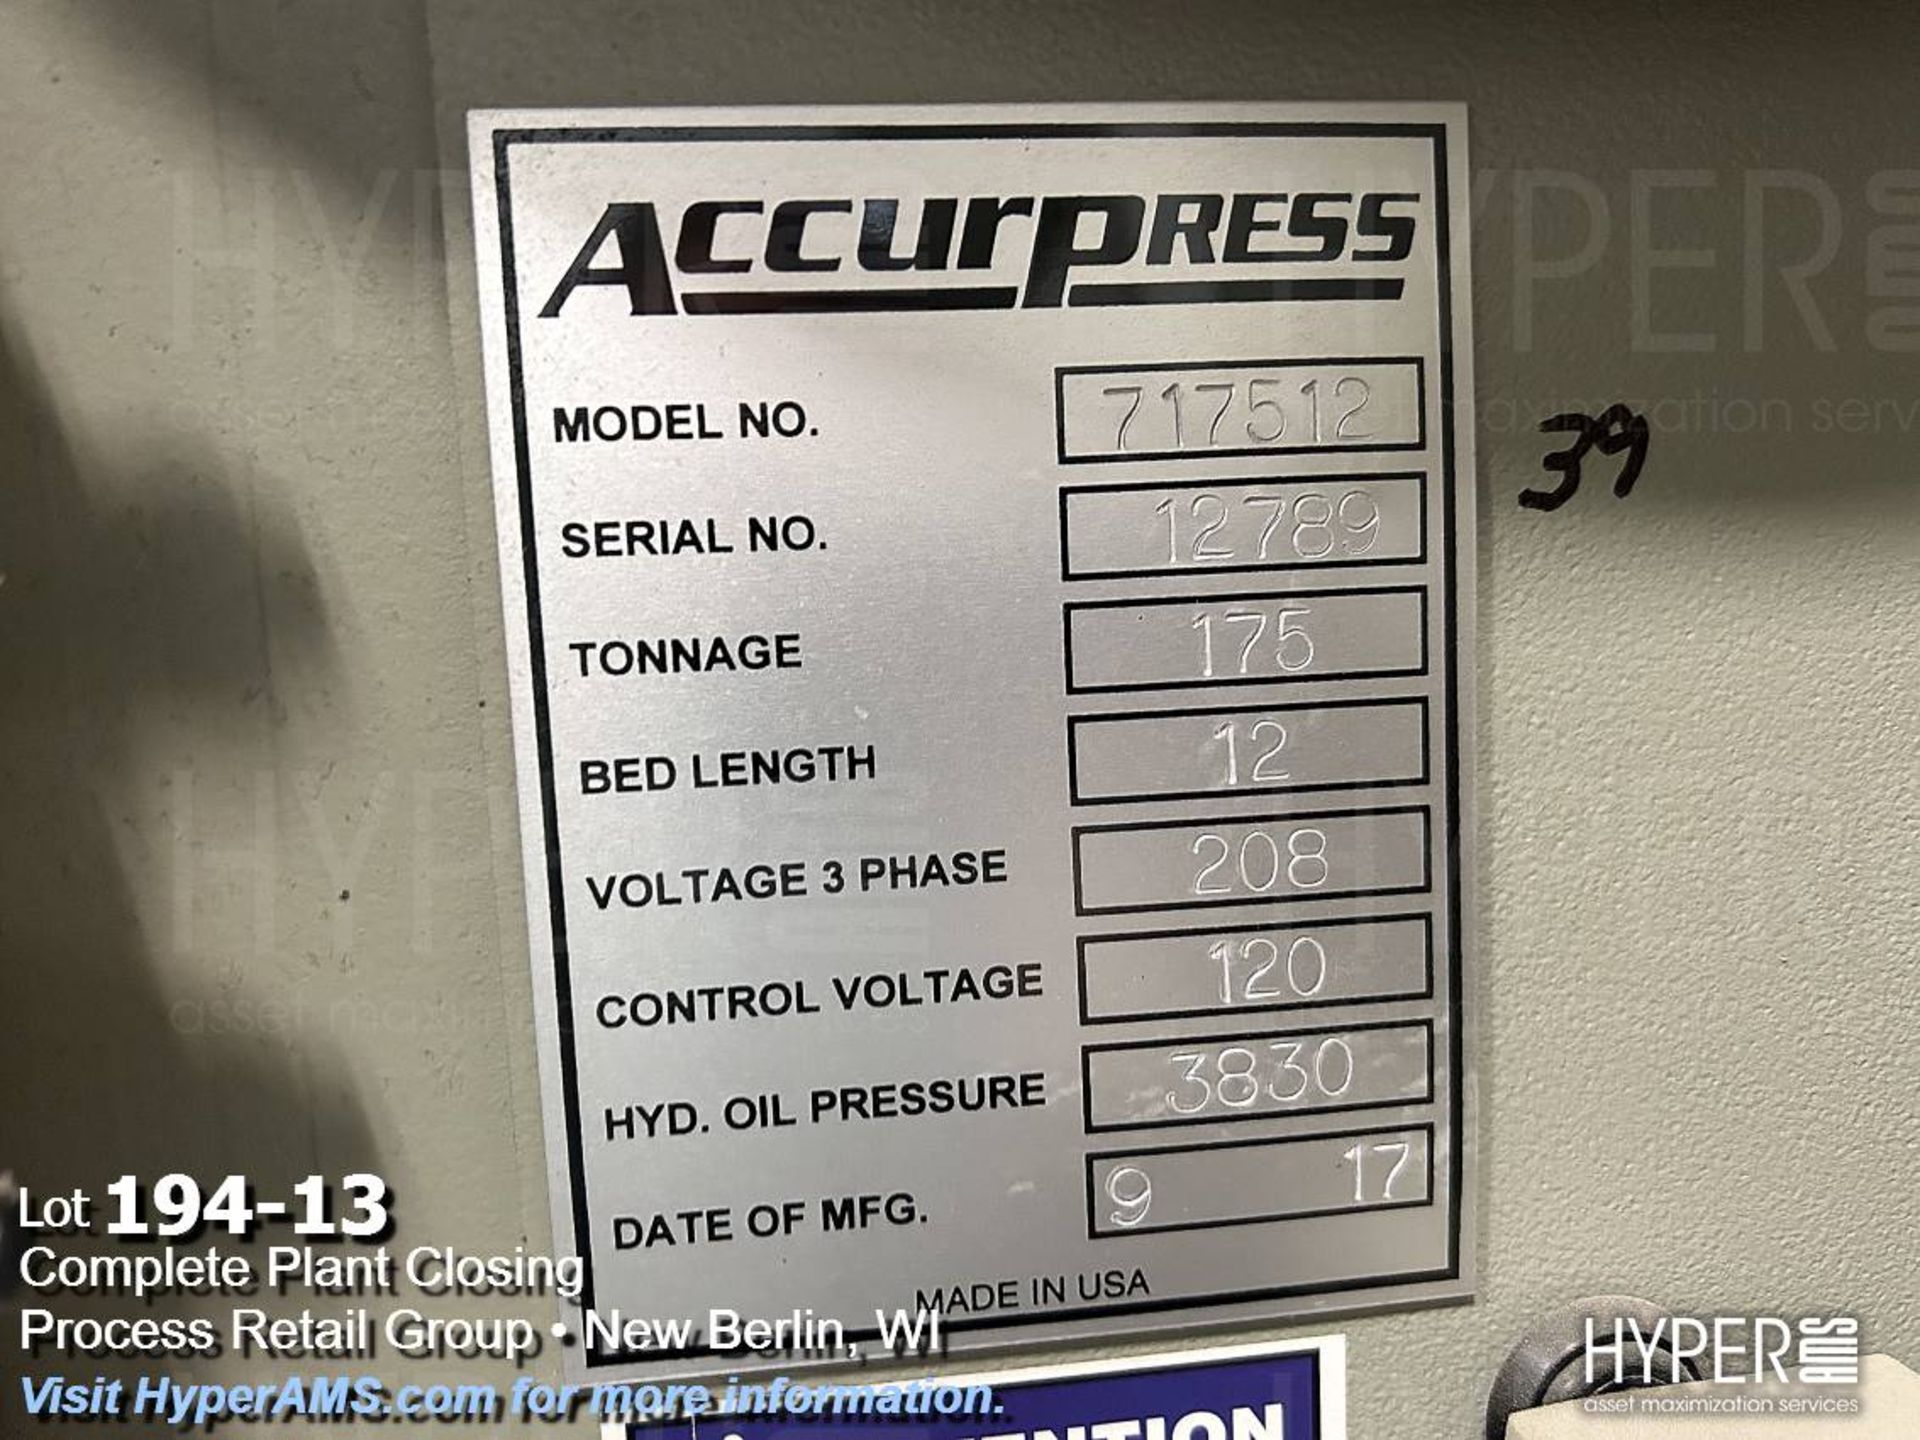 Accurpress 717512 Hydraulic Press Brake - Image 13 of 25